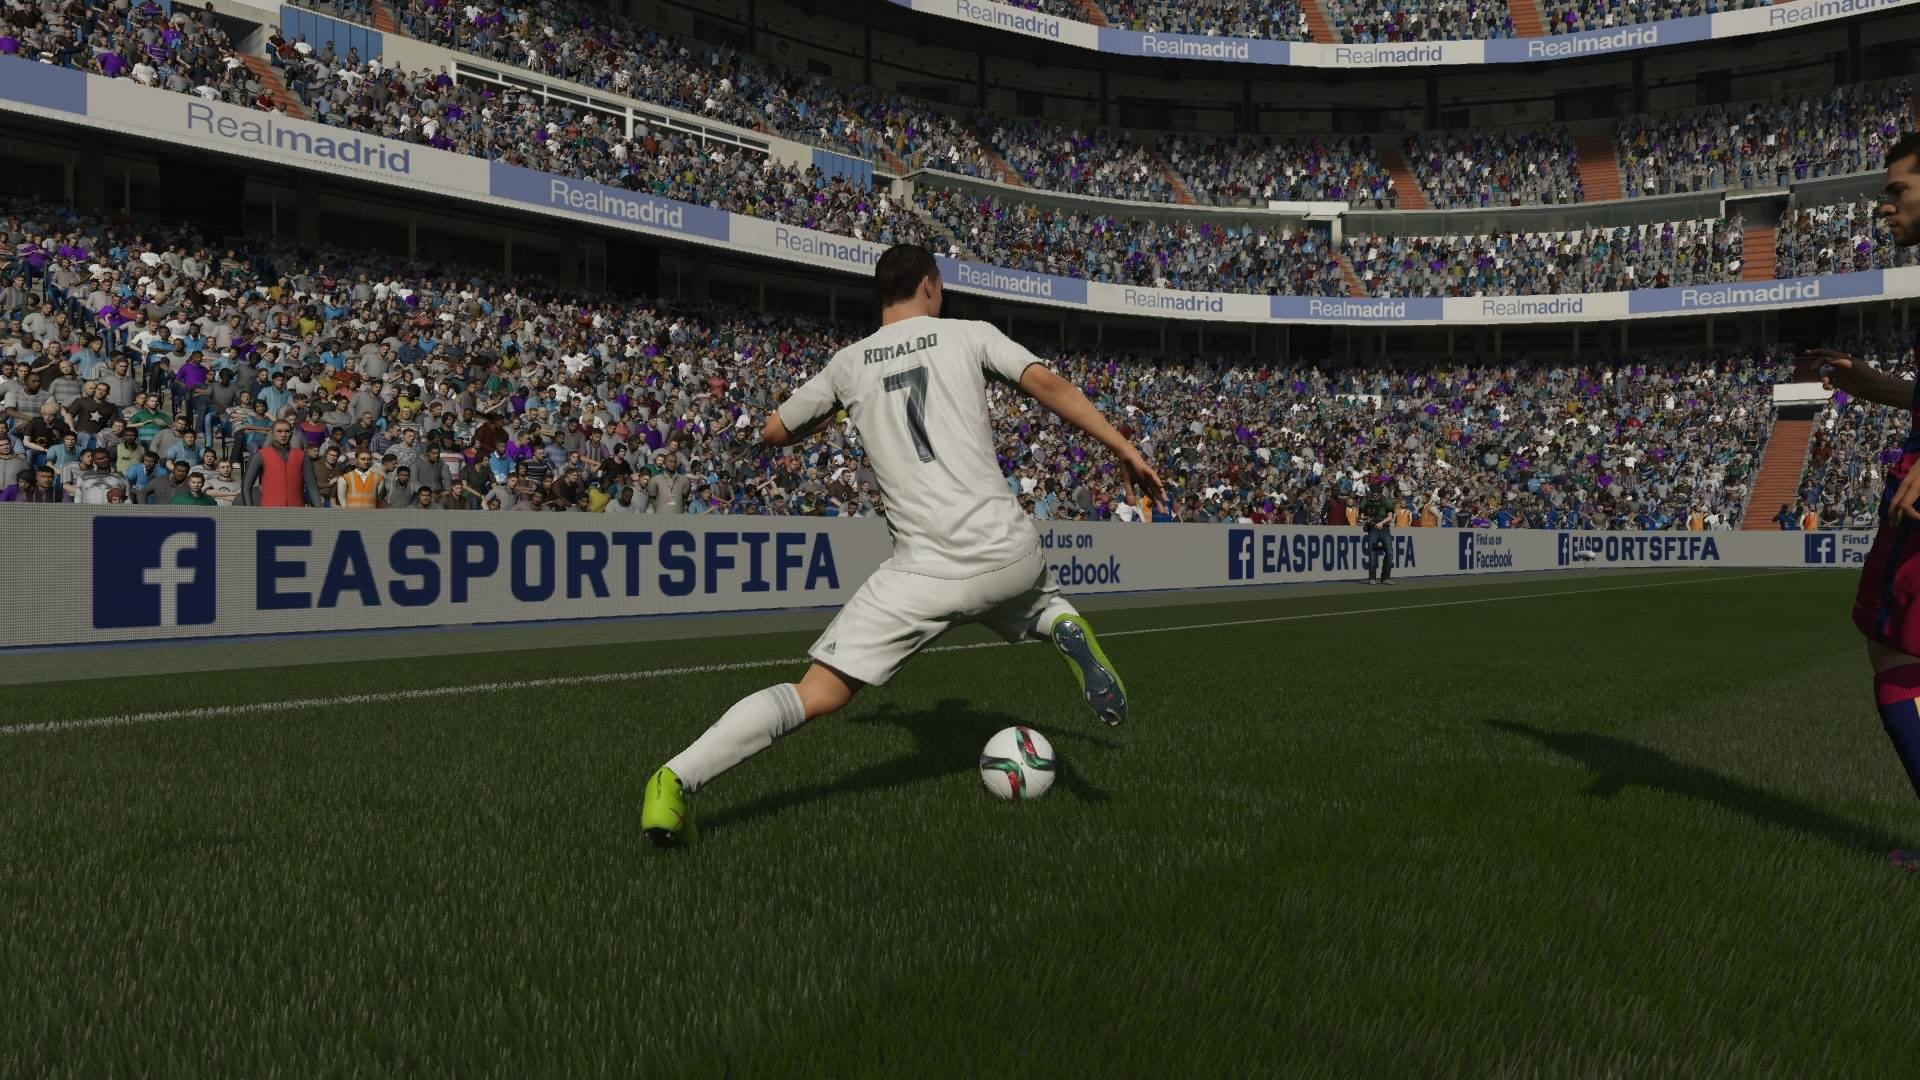 FIFA 16 [Origin/EA app] с гарантией ✅ | offline